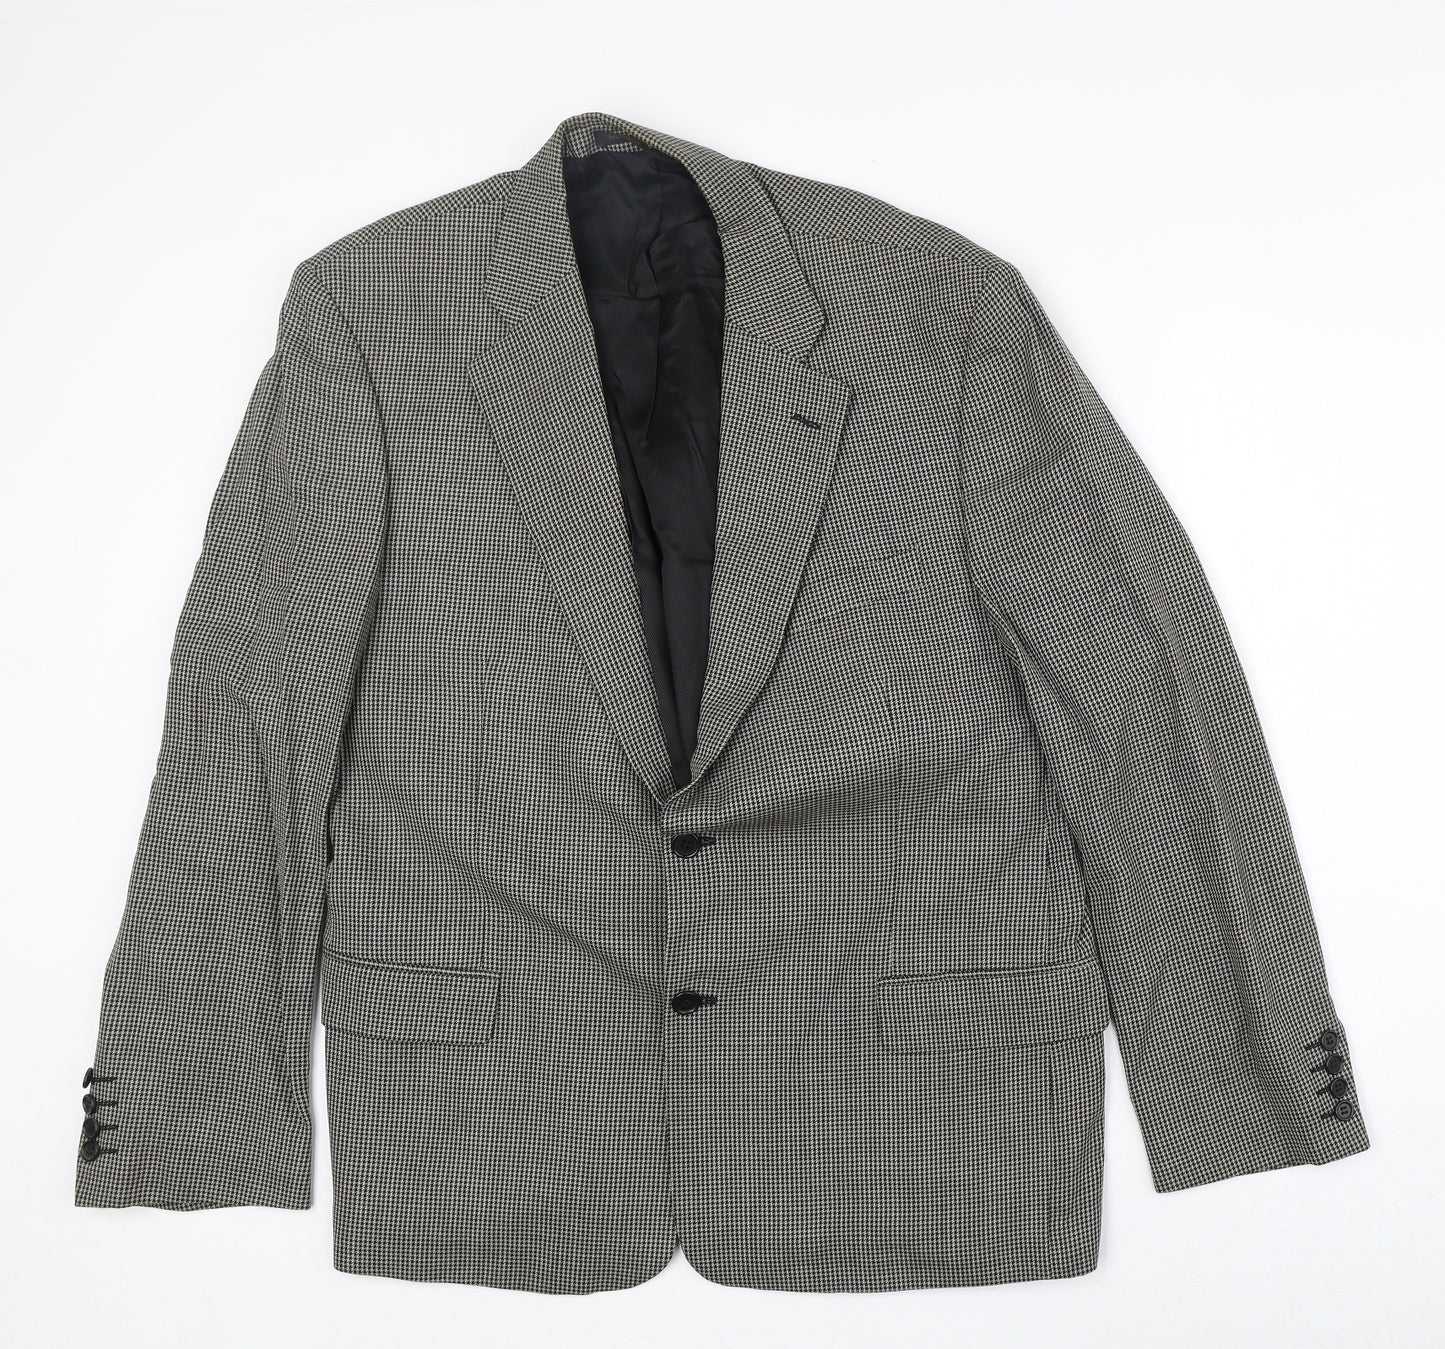 Marks and Spencer Mens Beige Geometric Wool Jacket Suit Jacket Size 44 Regular